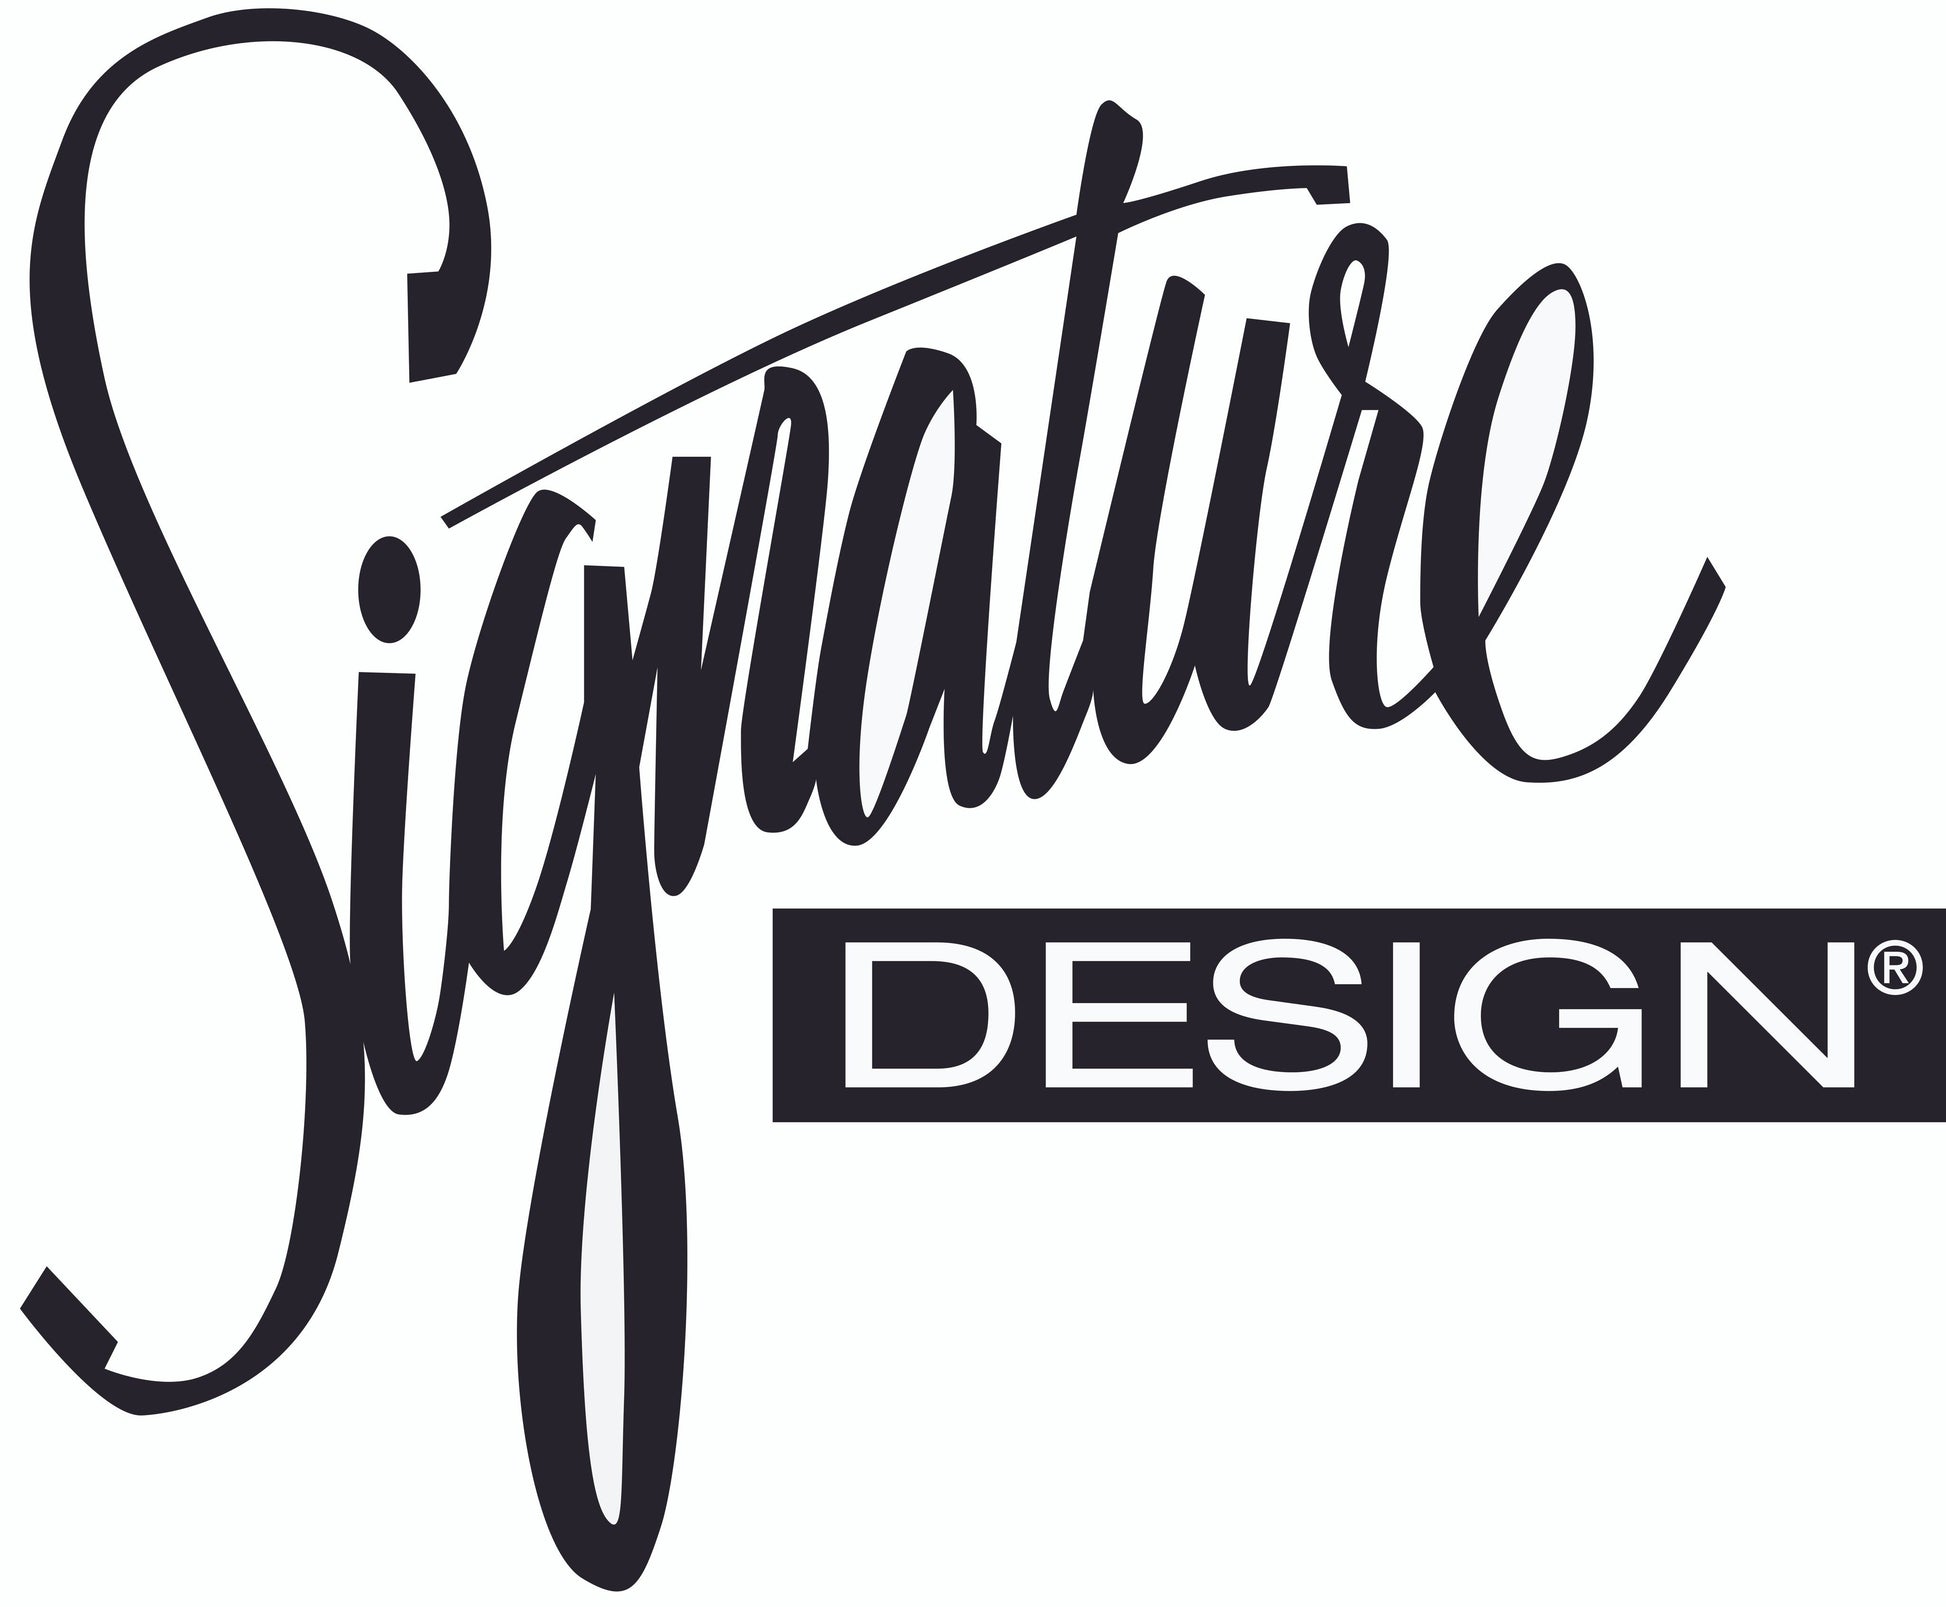 Kerbert Terracotta Table Lamp (1/CN) Signature Design by Ashley®